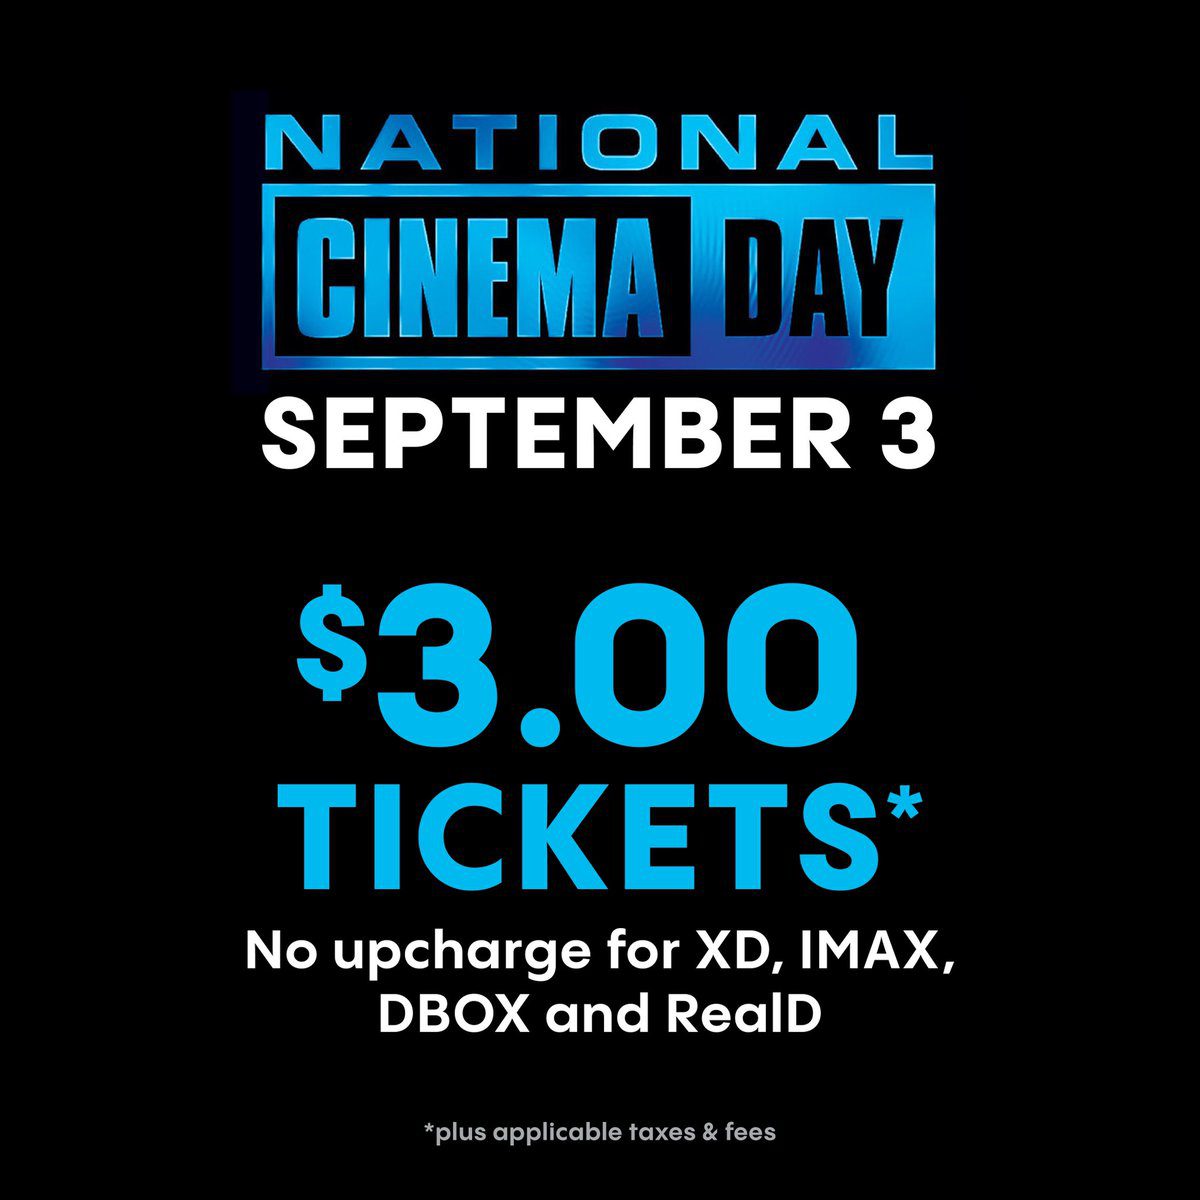 National Cinema Day bodes cheap ticket deals